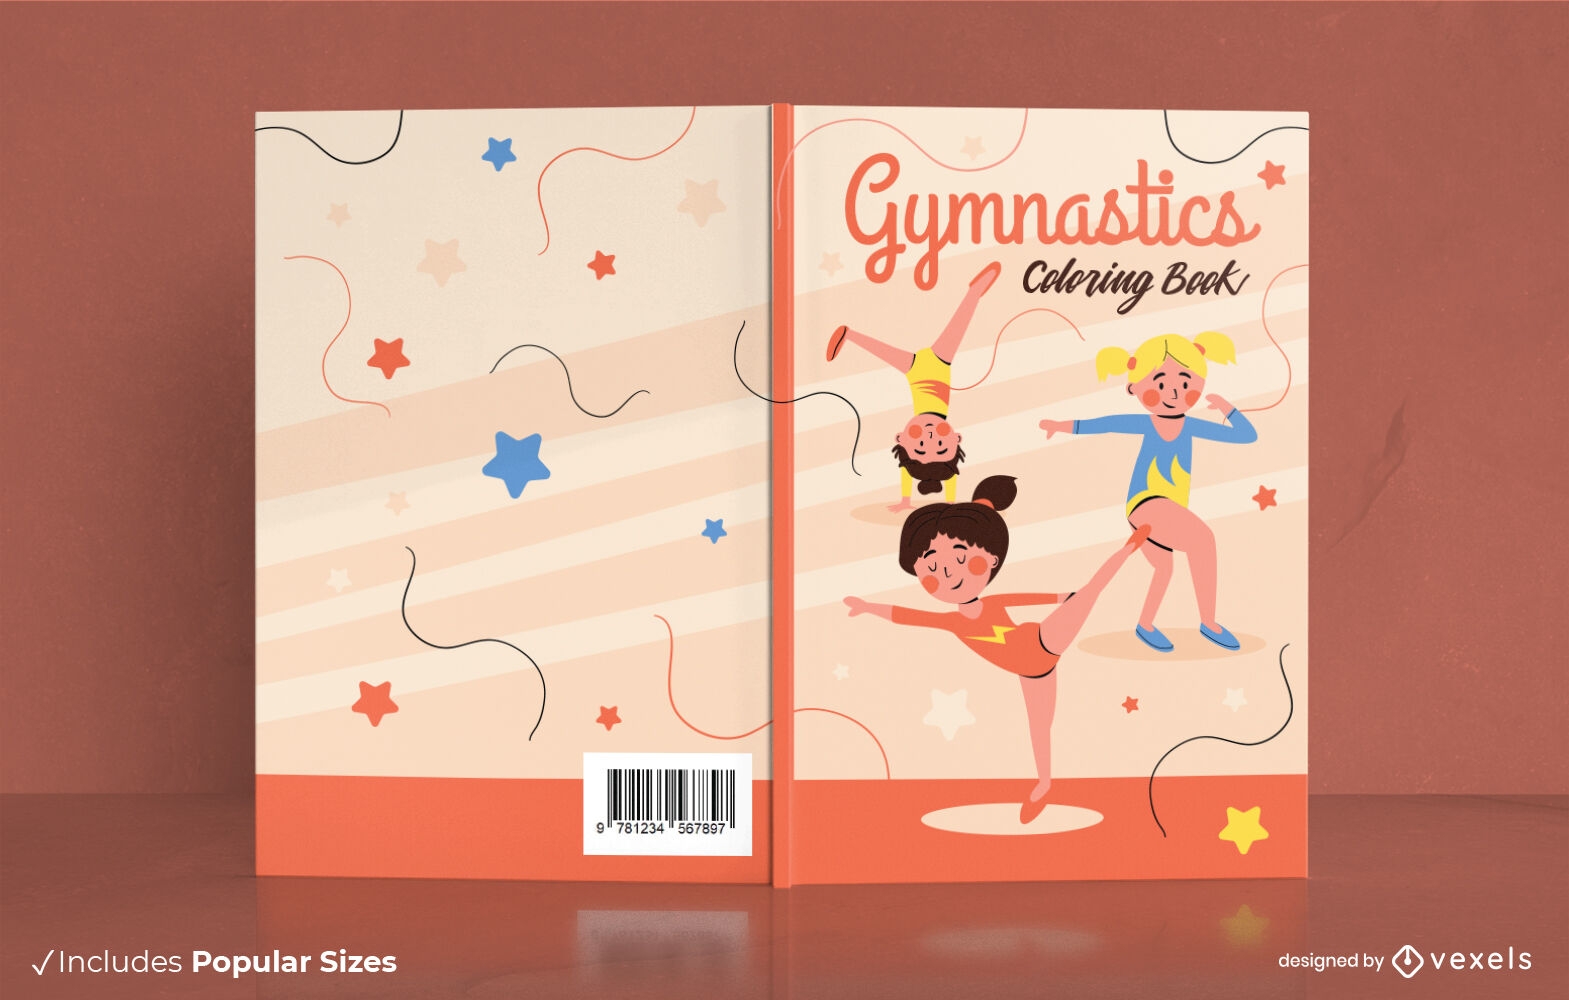 Gymnastics coloring book cover design